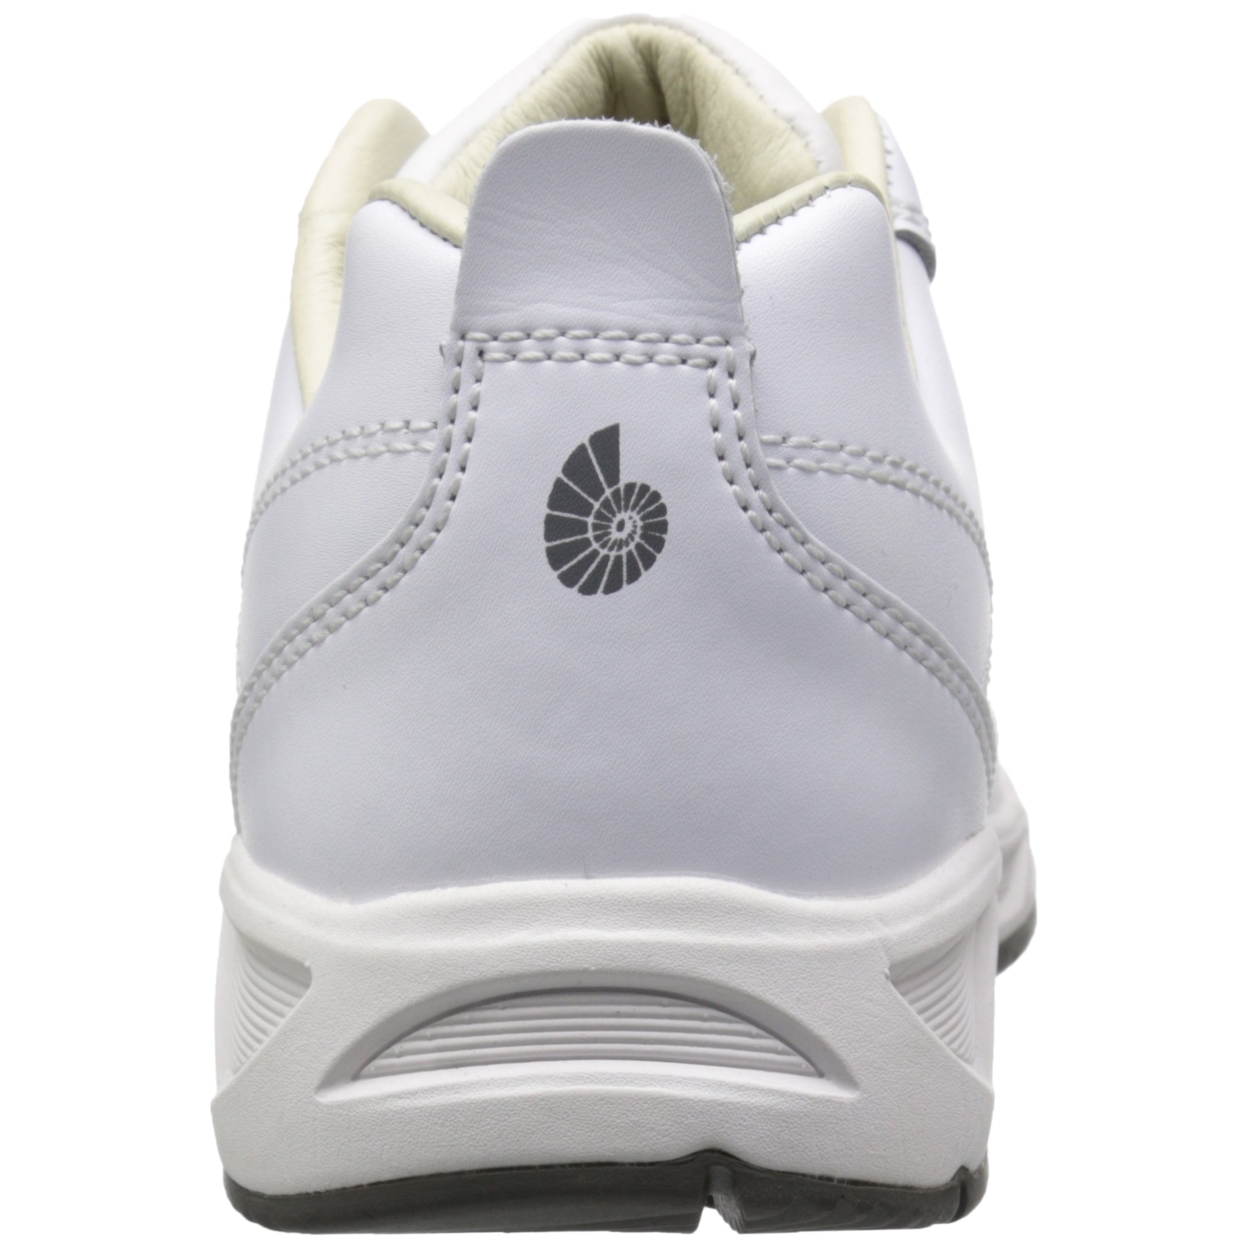 FSI FOOTWEAR SPECIALTIES INTERNATIONAL NAUTILUS Nautilus 4046 ESD No Exposed Metal Soft Toe Clean Room Athletic Shoe WHITE - WHITE, 8-W